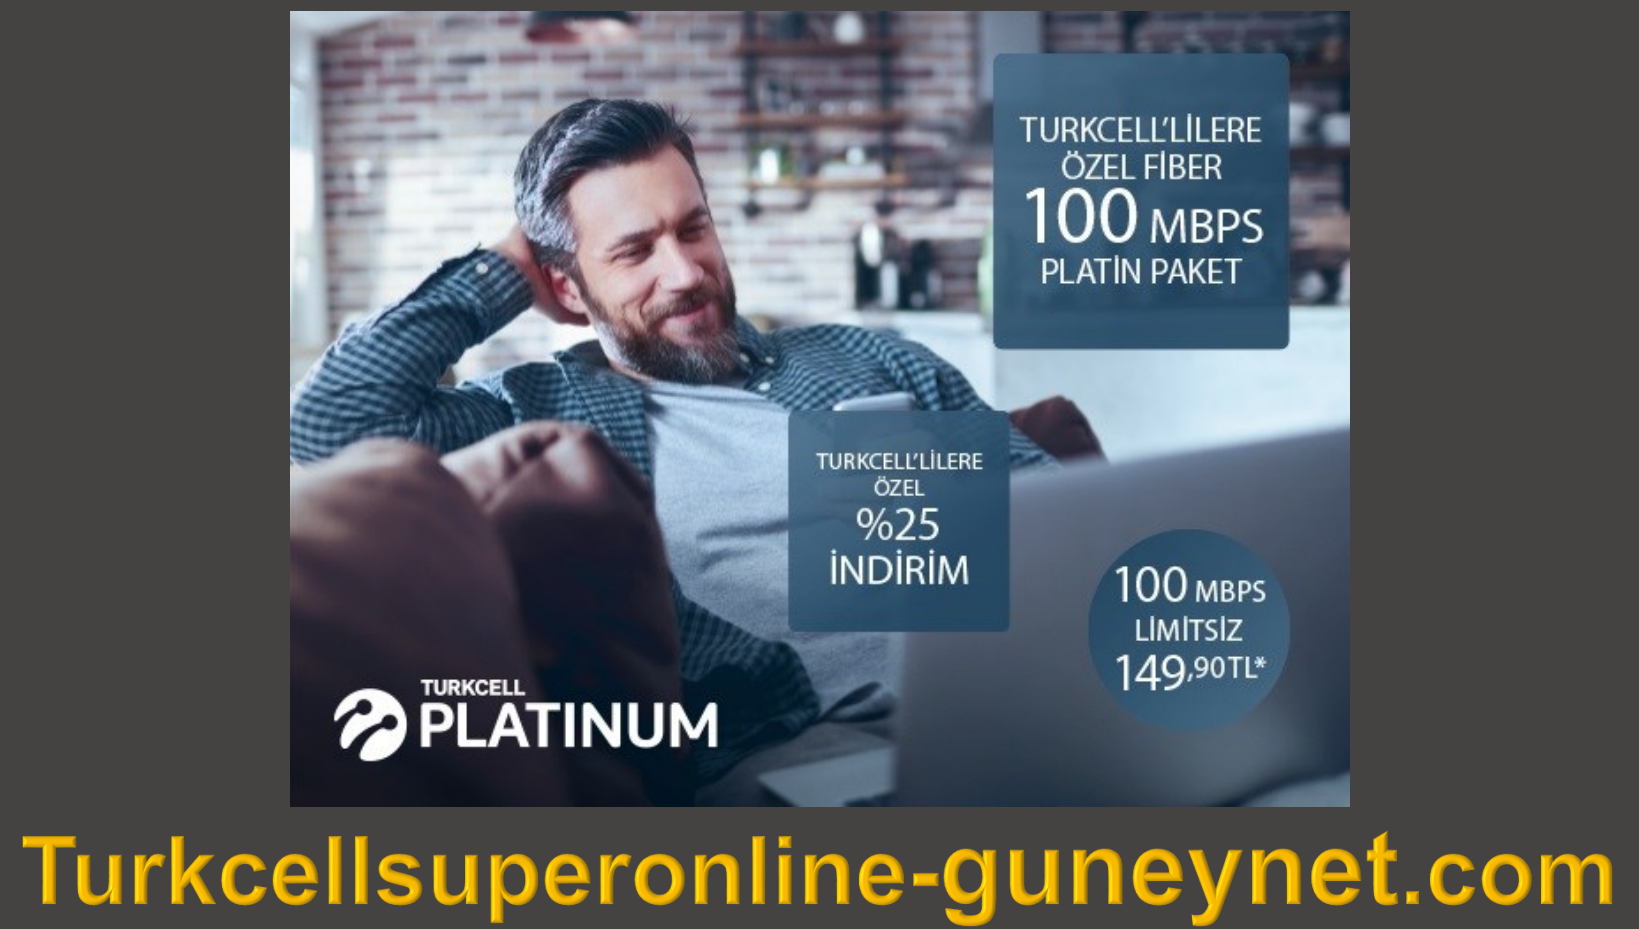 Turkcell Superonline’nın Adresi Guneynet